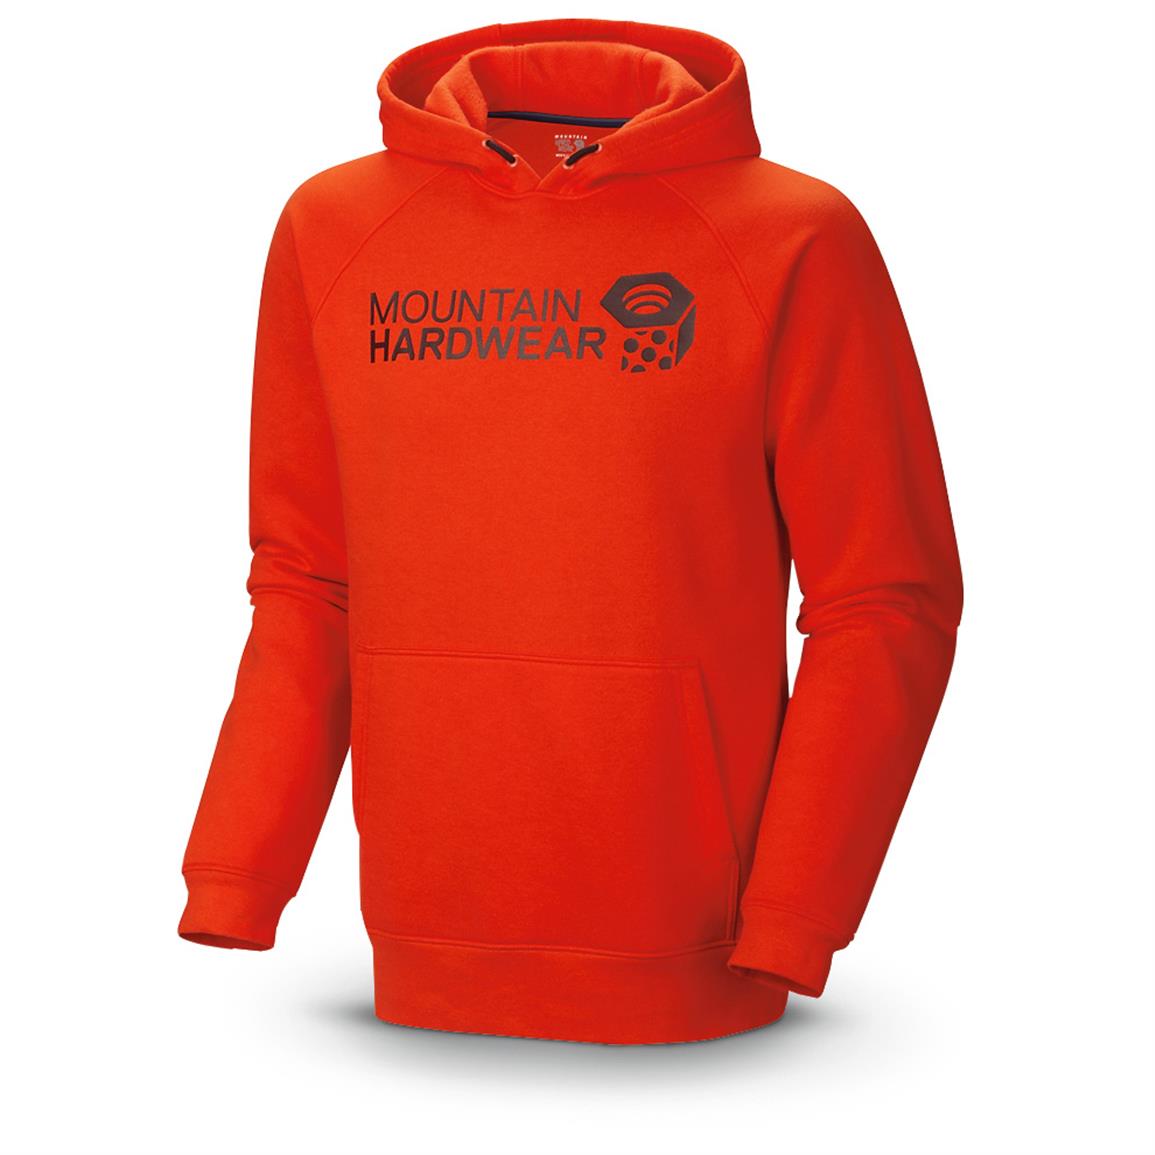 mountain hardwear sweatshirt